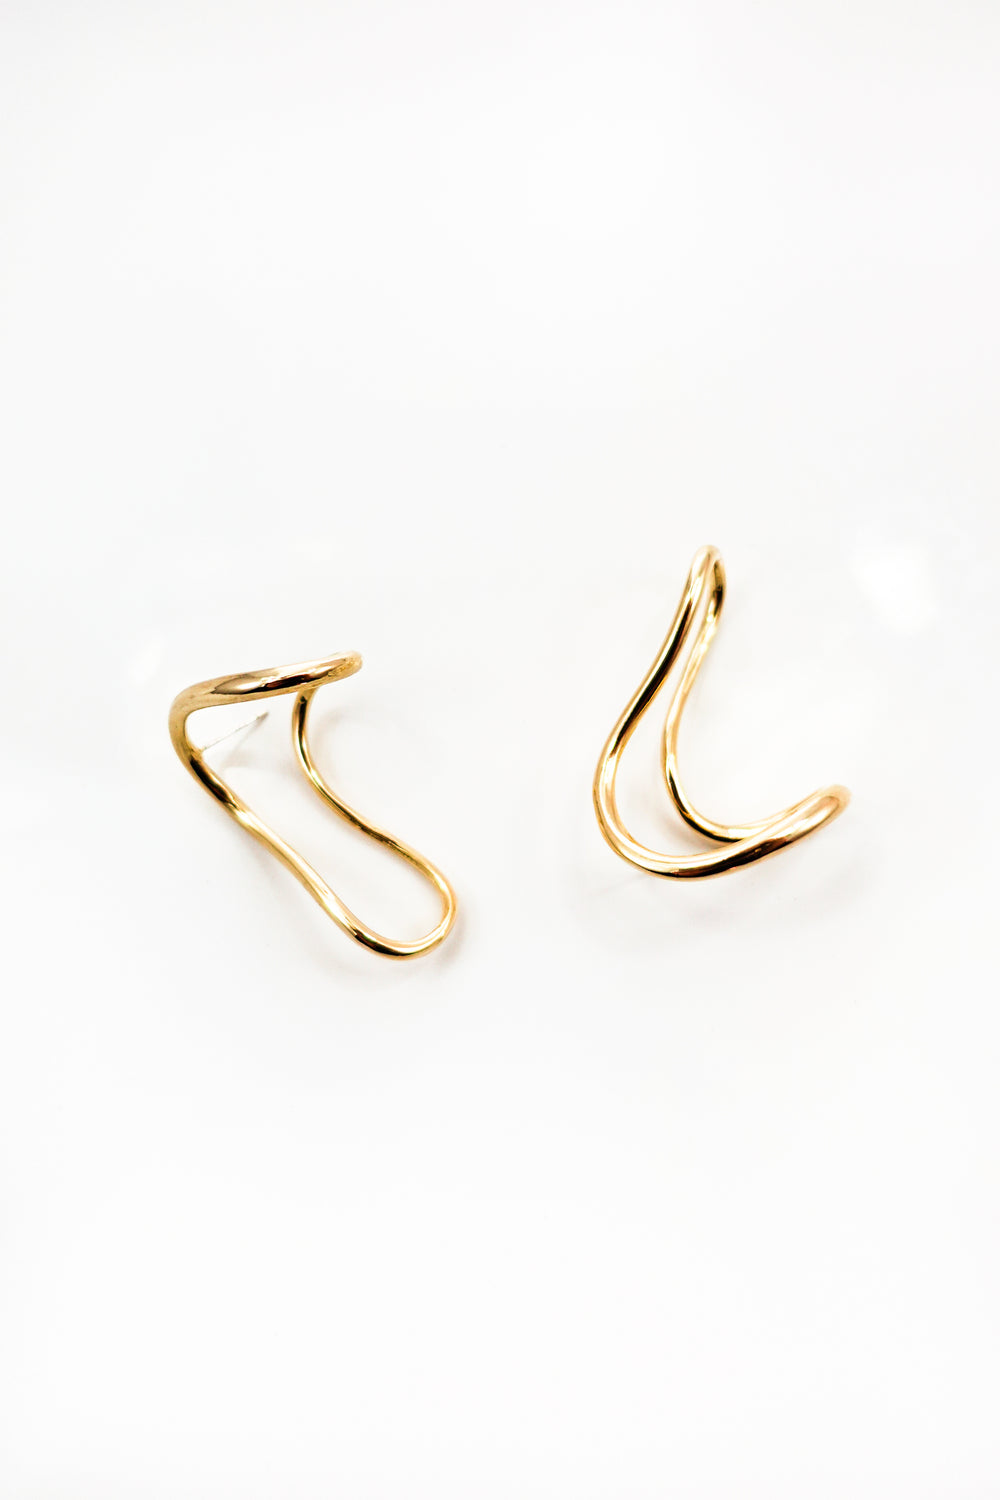 KoKo Capri - Jewelry designed by us, Inspired by you – Koko Capri